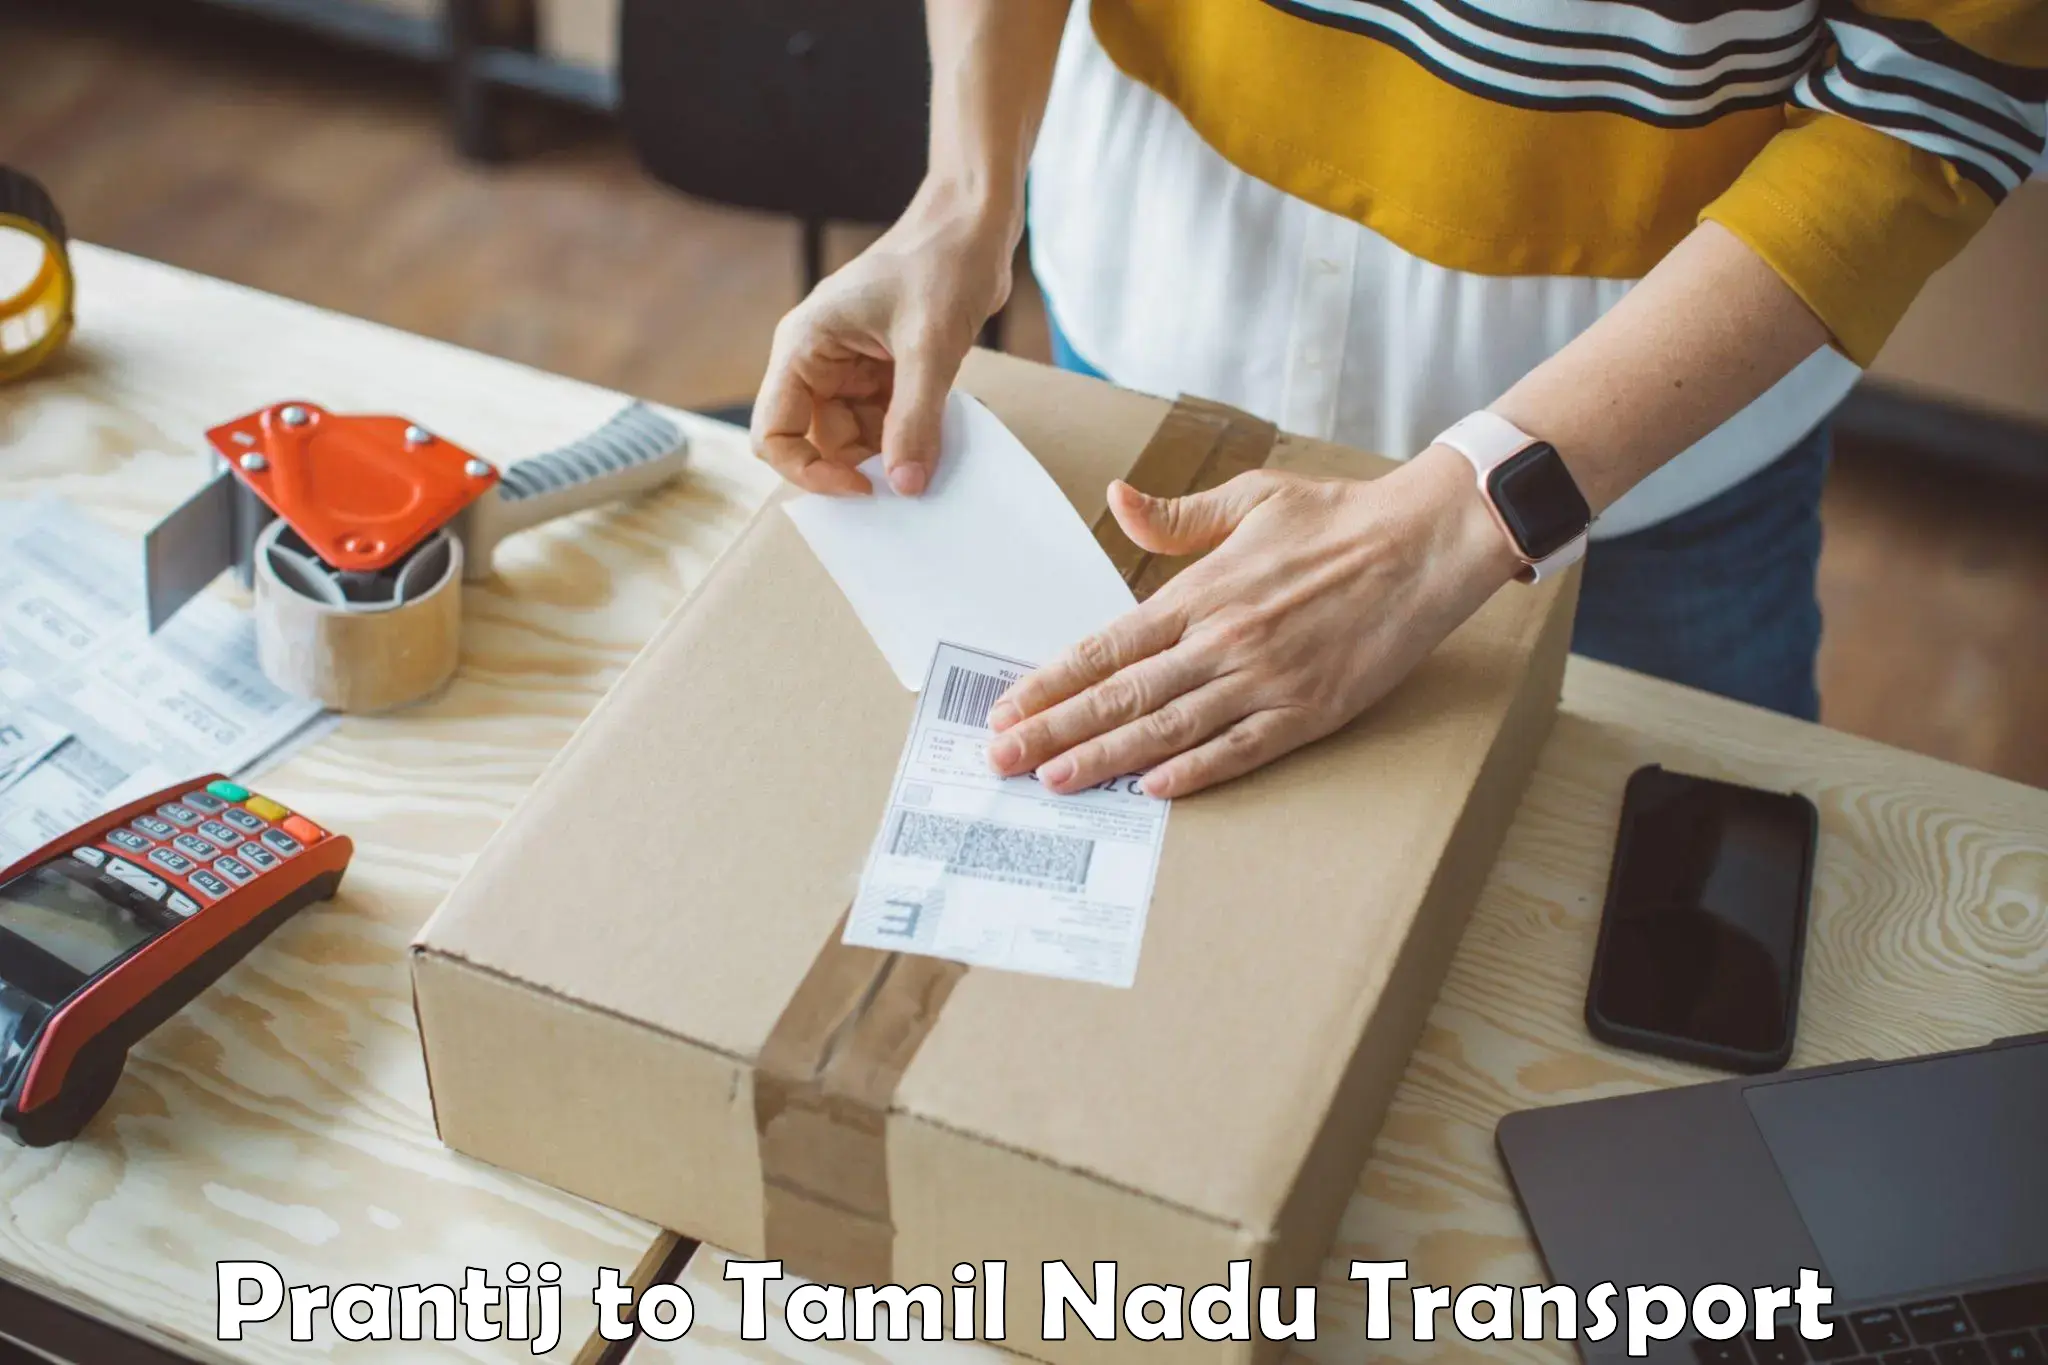 Daily transport service Prantij to Tamil Nadu